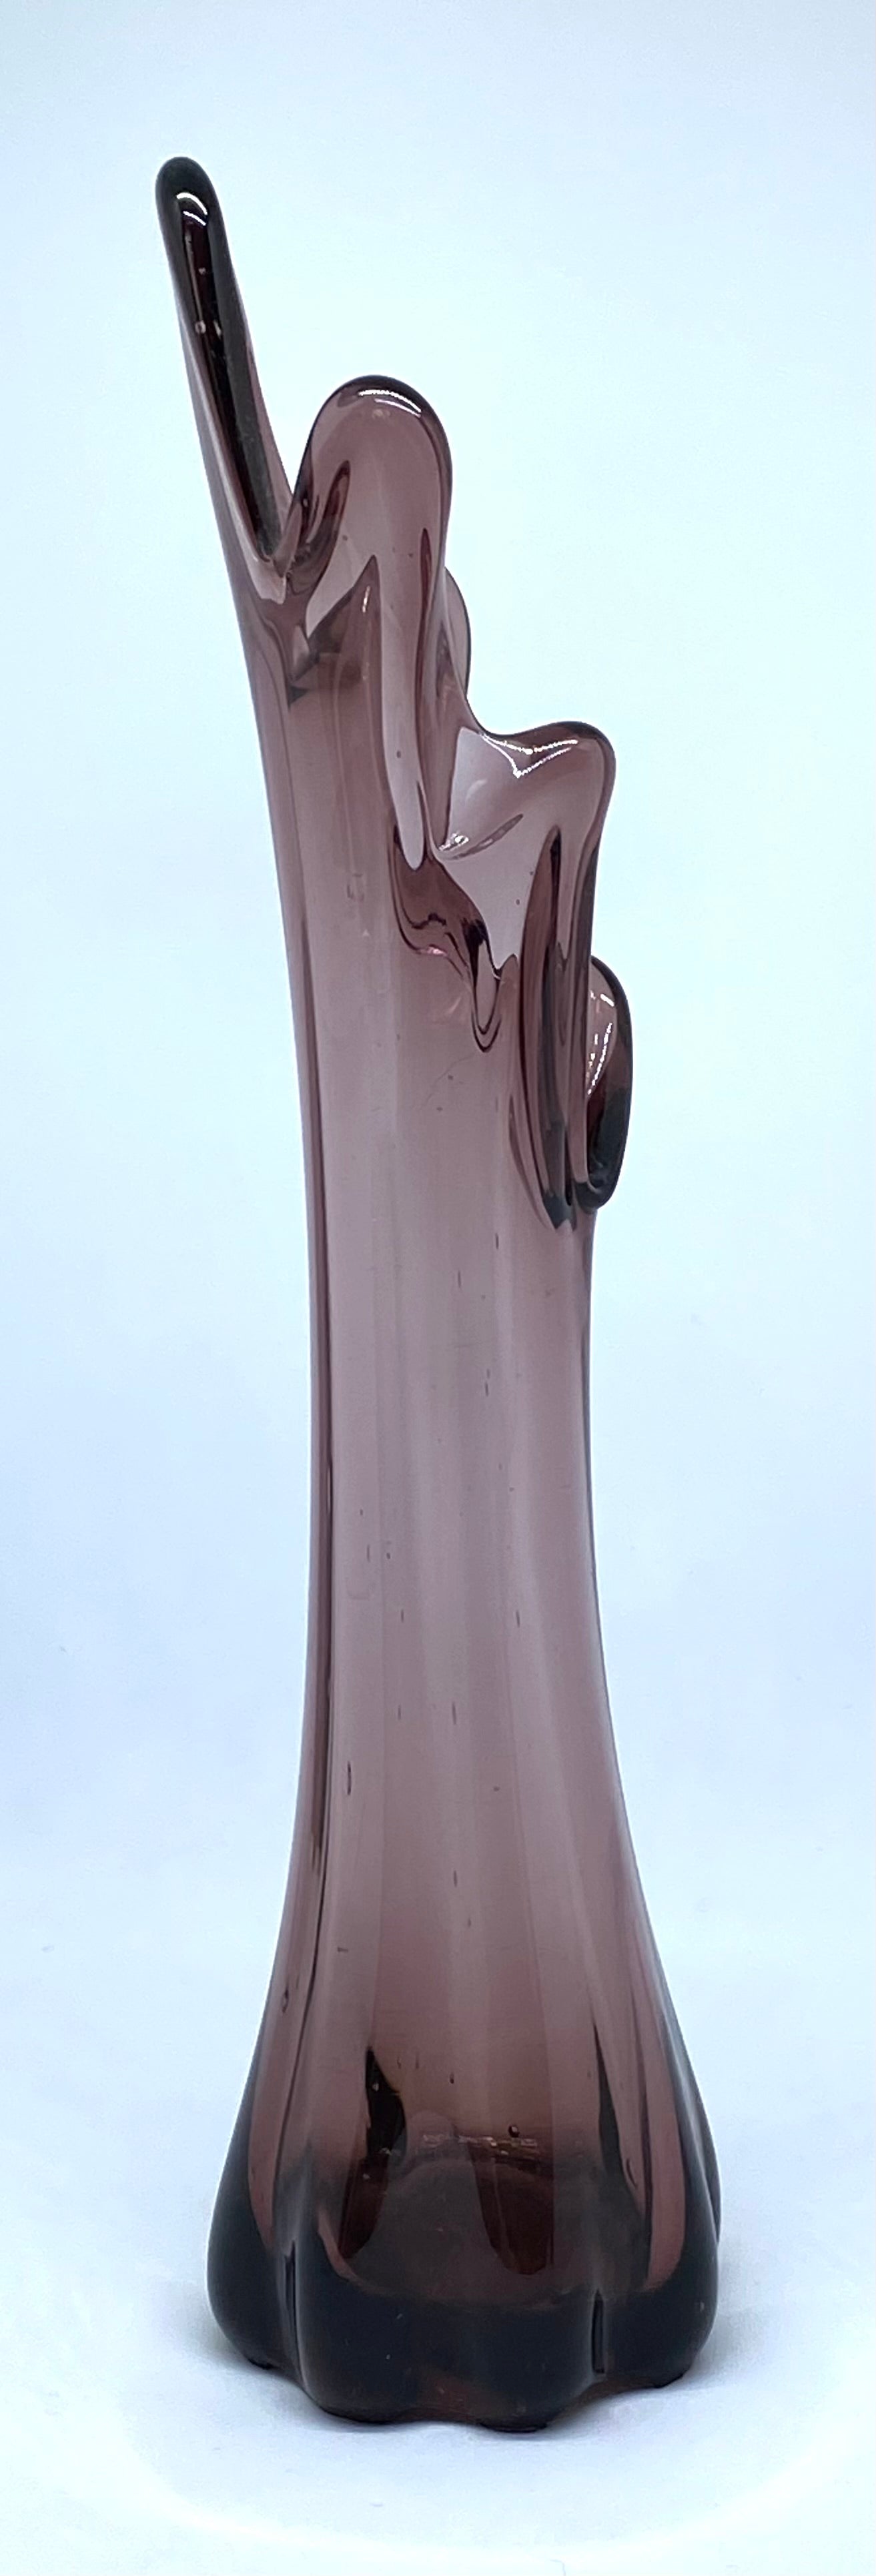 'Murano' style finger glass vase - purple